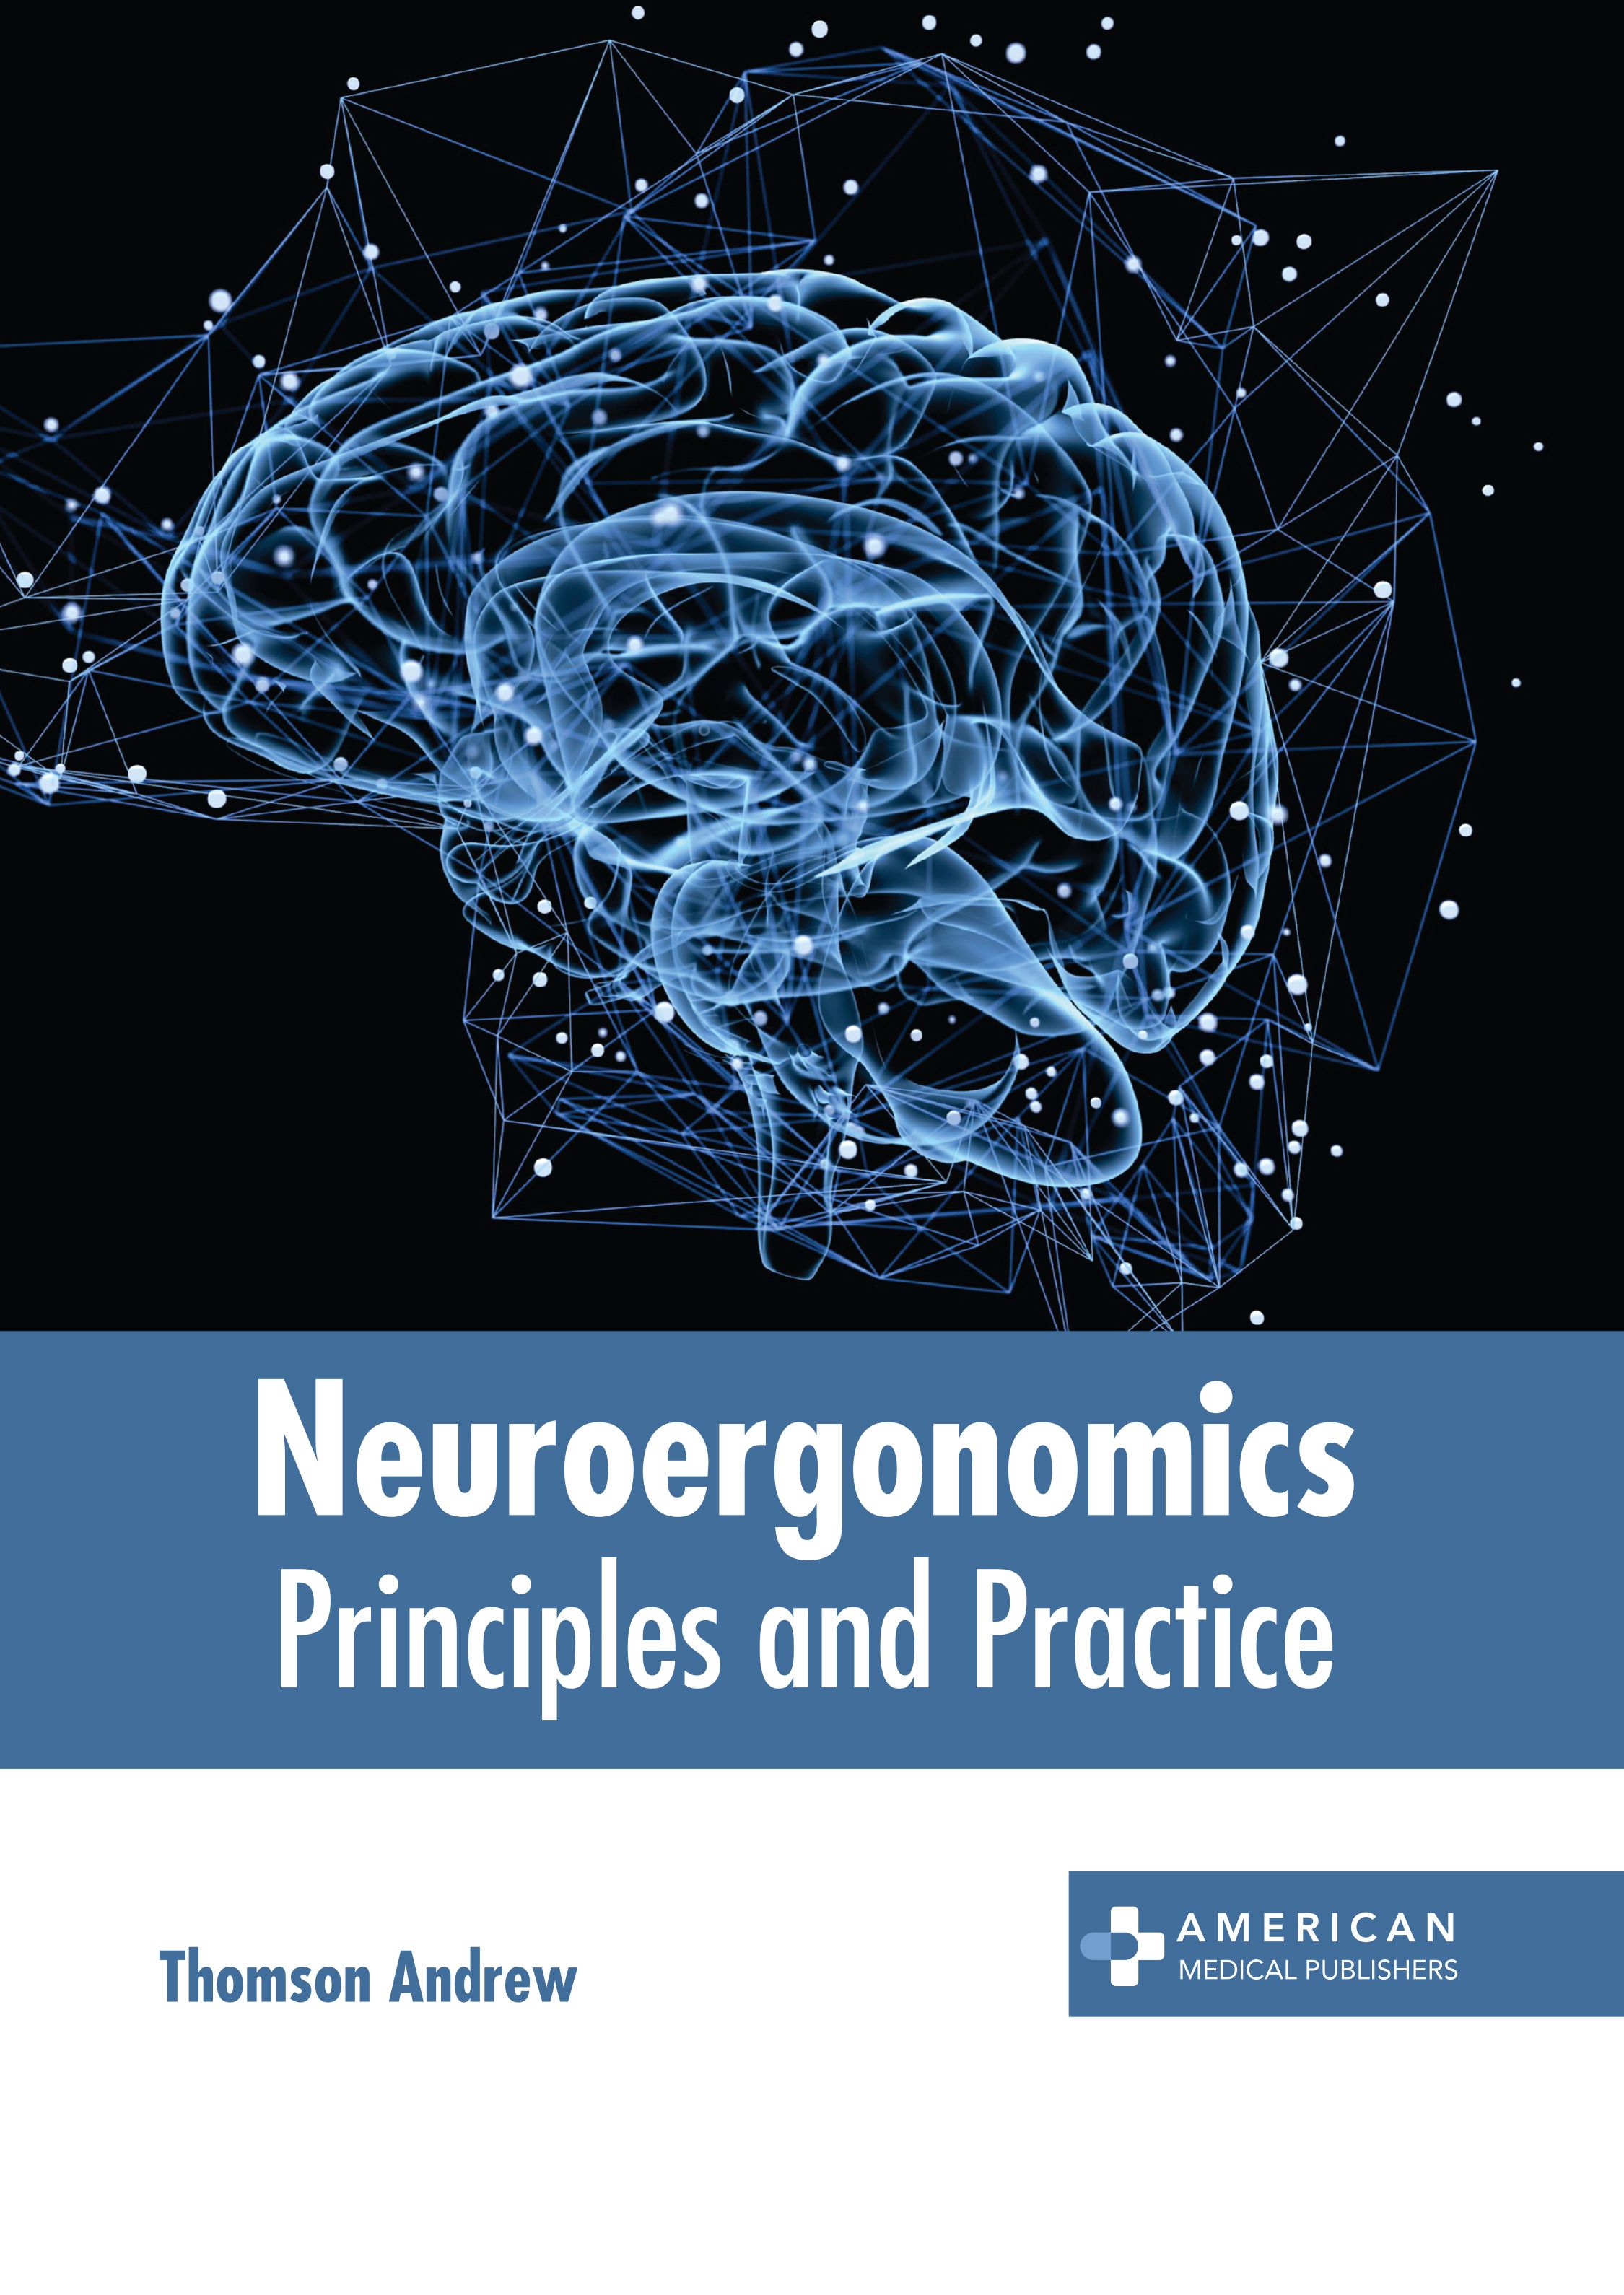 NEUROERGONOMICS: PRINCIPLES AND PRACTICE